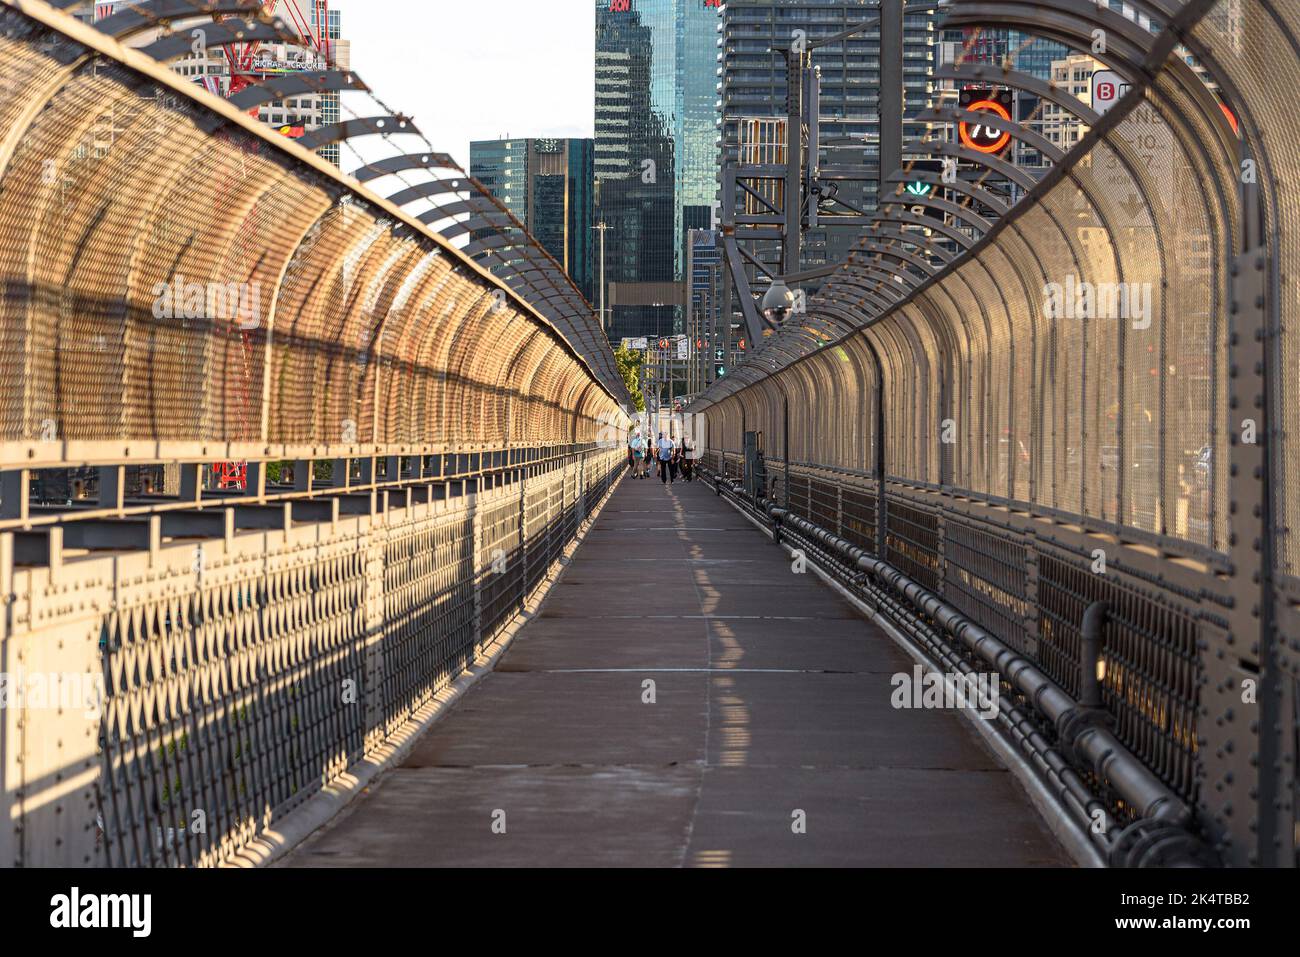 People walking across the Sydney Harbour Bridge on the pedestrian footpath Stock Photo